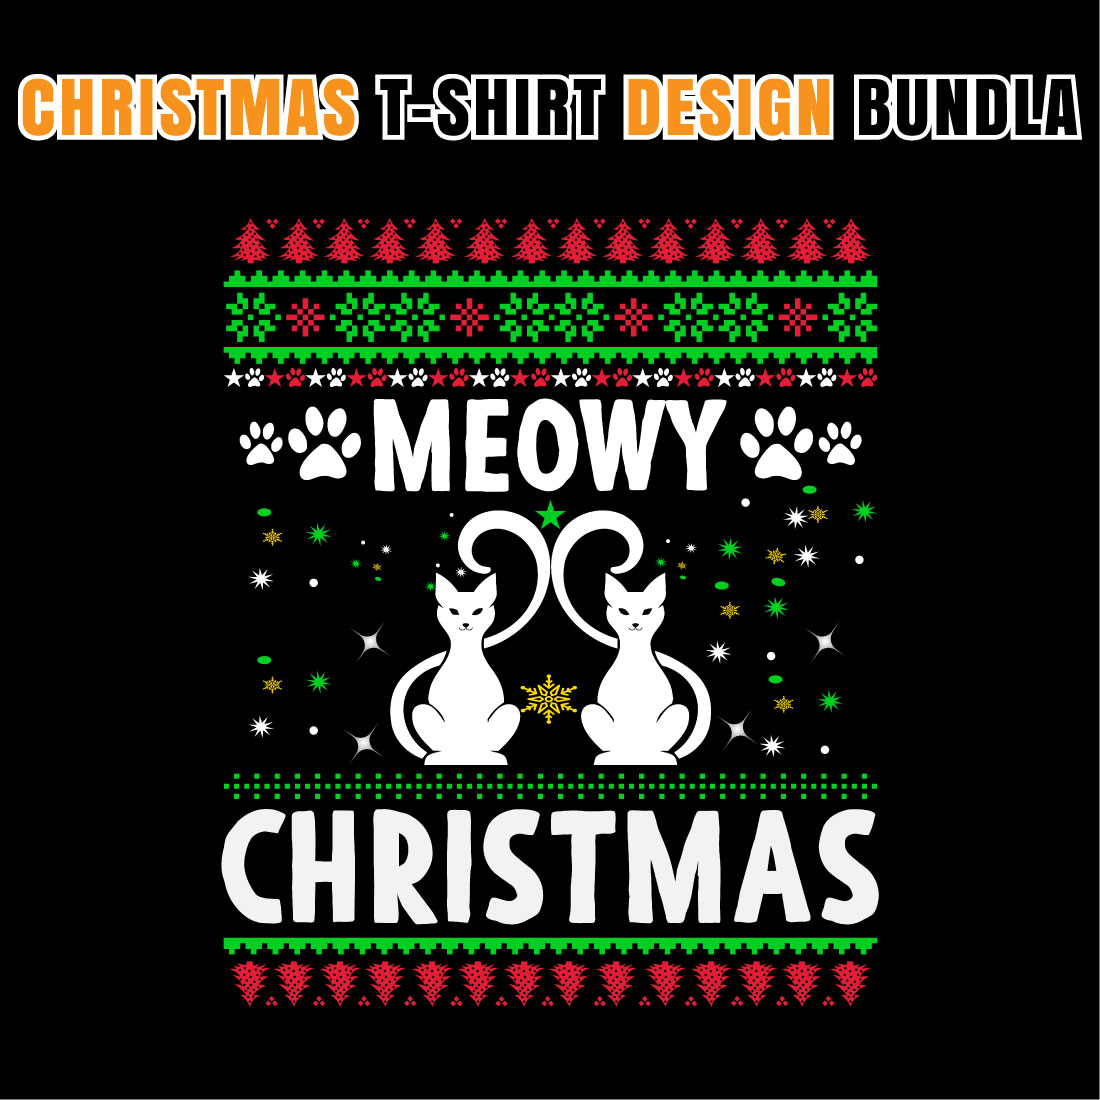 Christmas T-shirt Cats Designs Bundle V.1 facebook image.